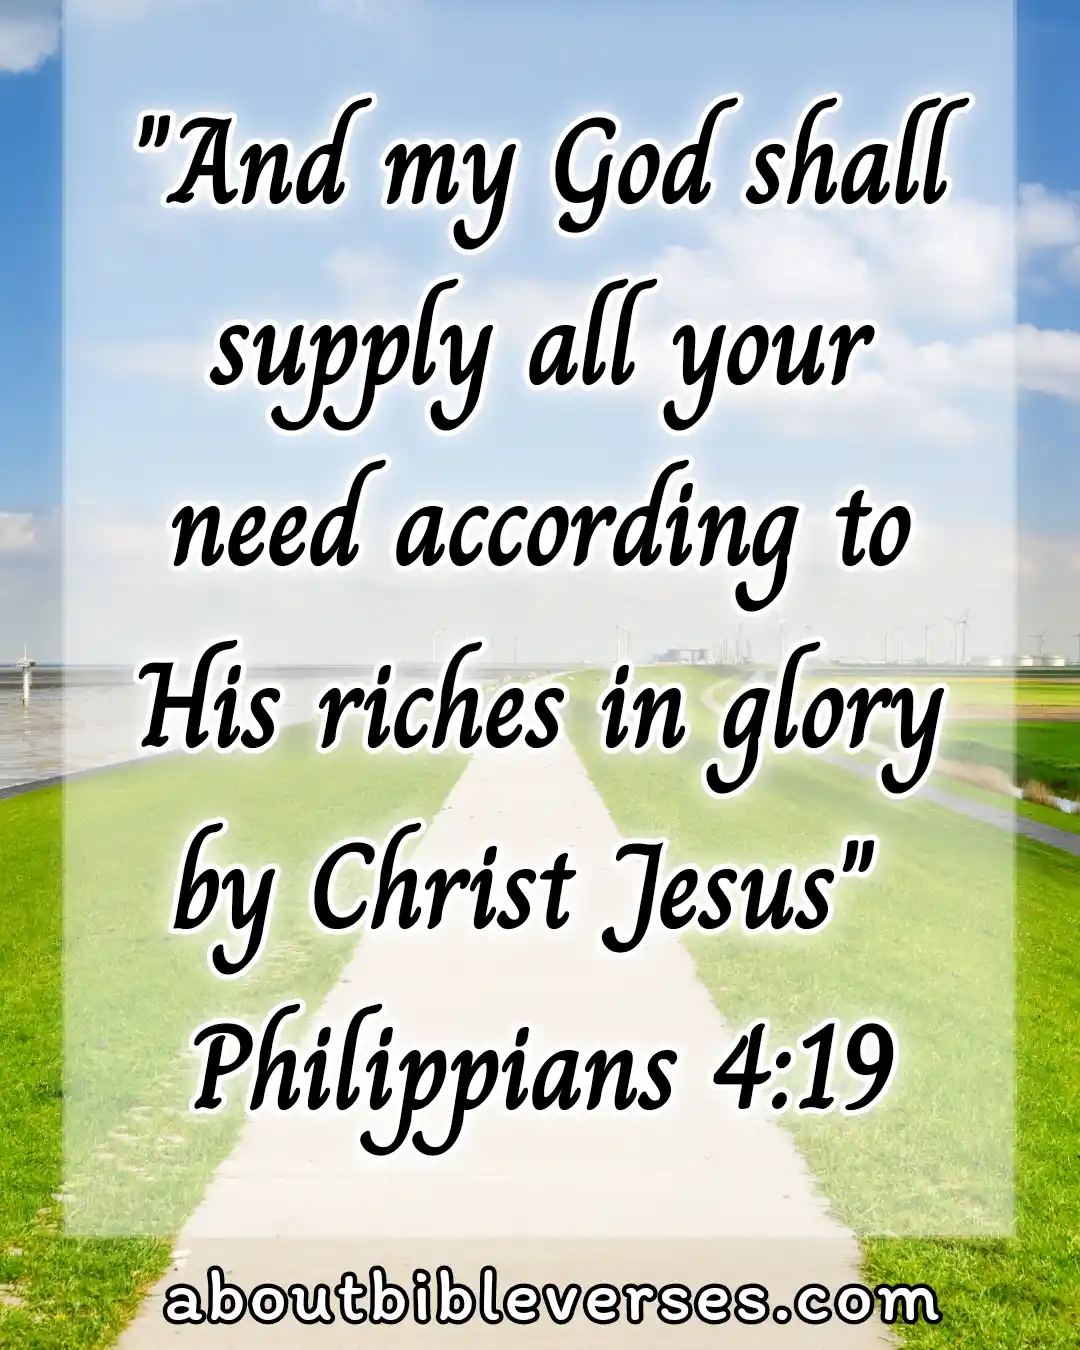 Short Bible Verses For Facebook, Instagram, Whatsapp (Philippians 4:19)